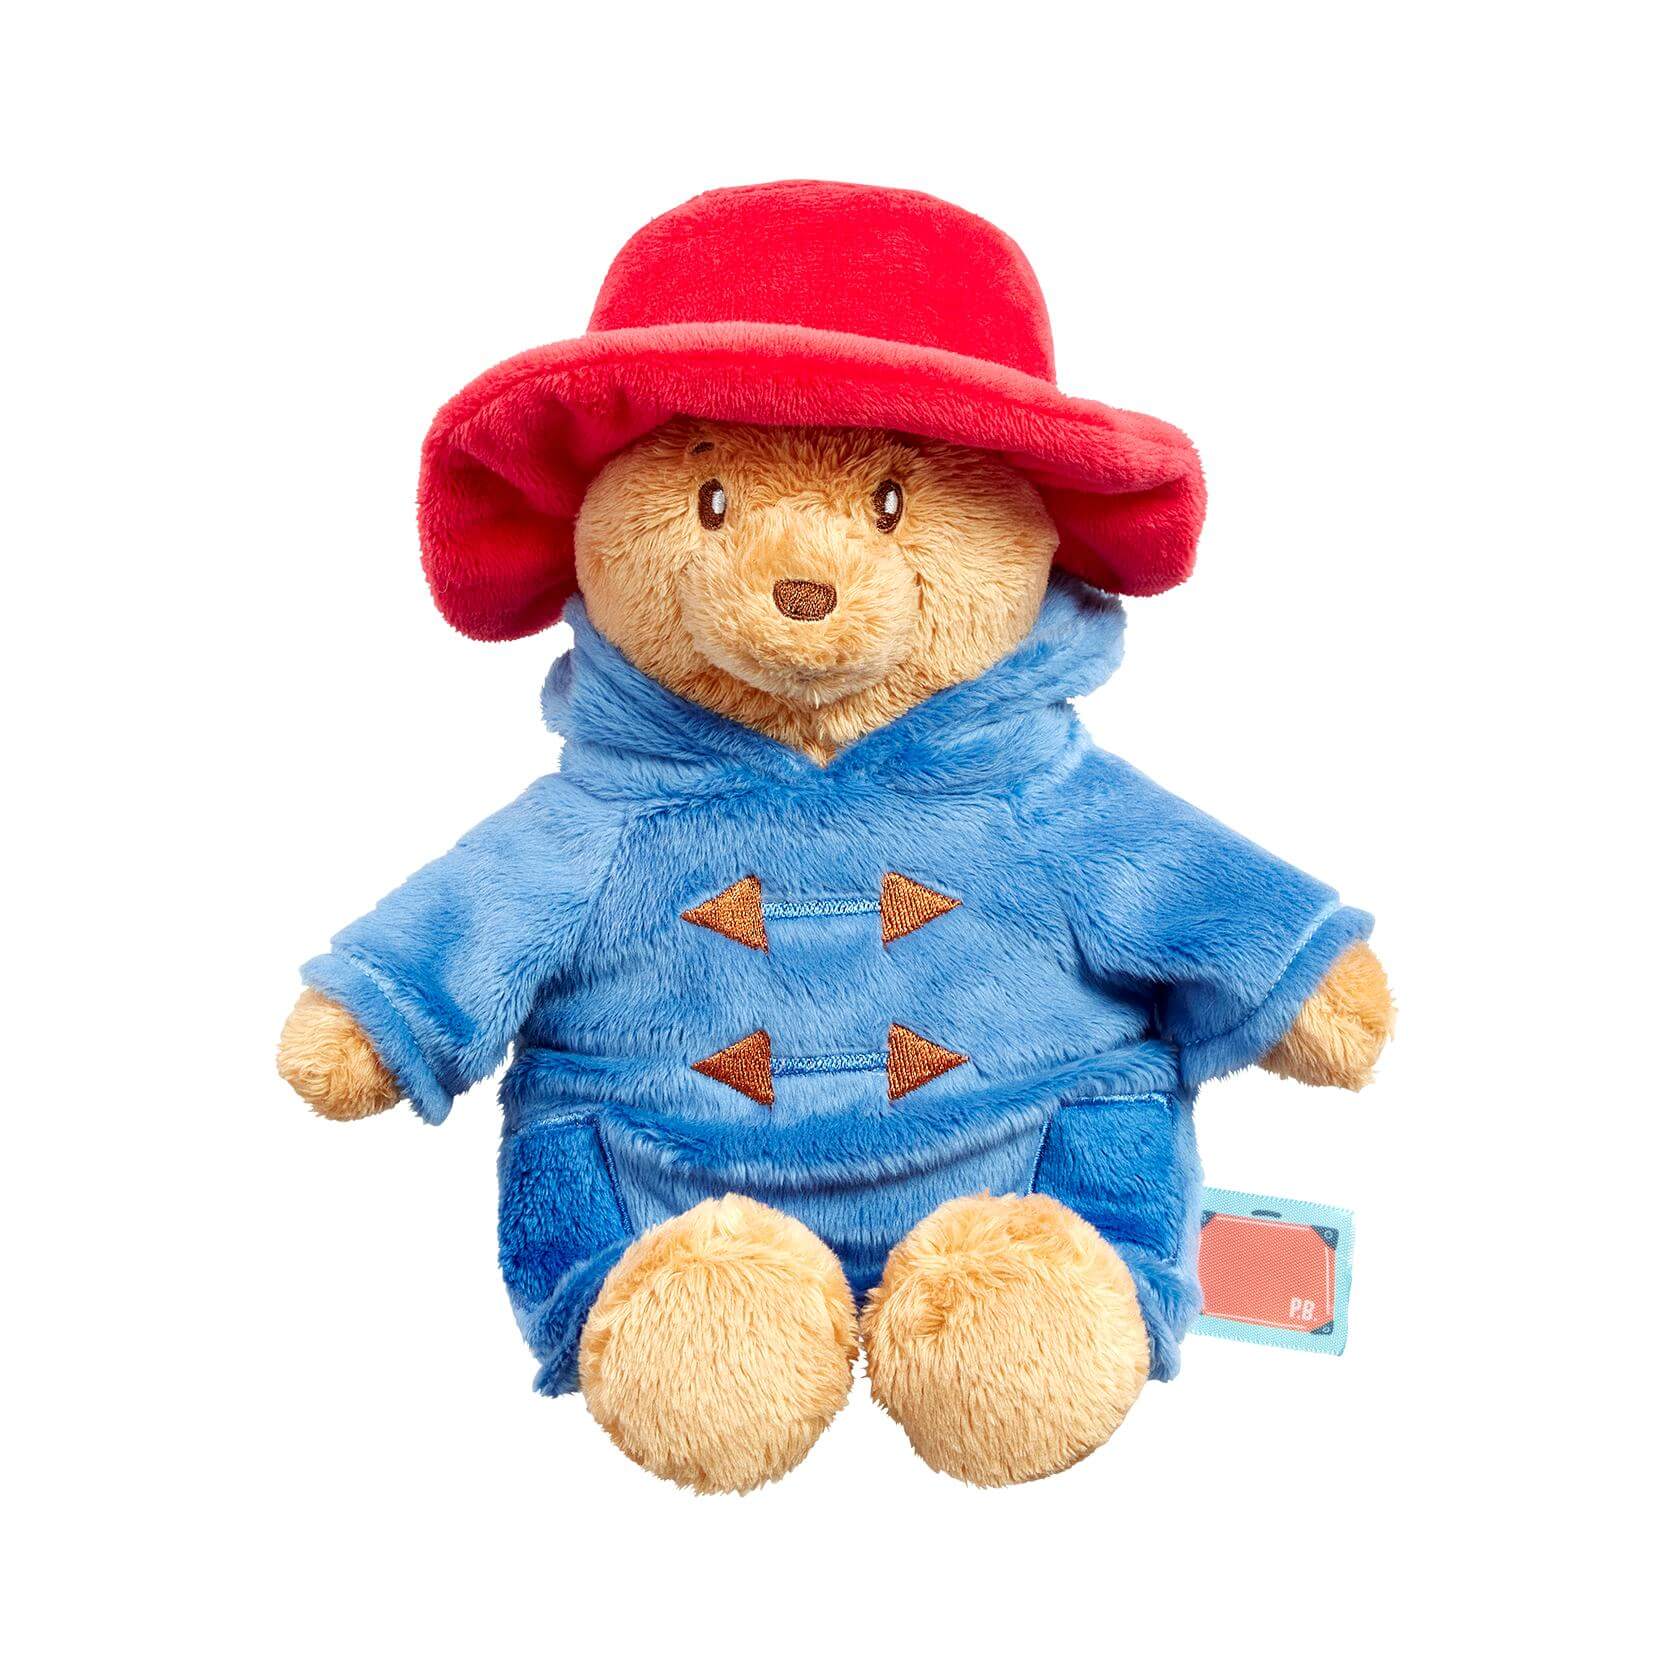 Official Paddington Bear Soft Toy - My First Paddington Plush Toy